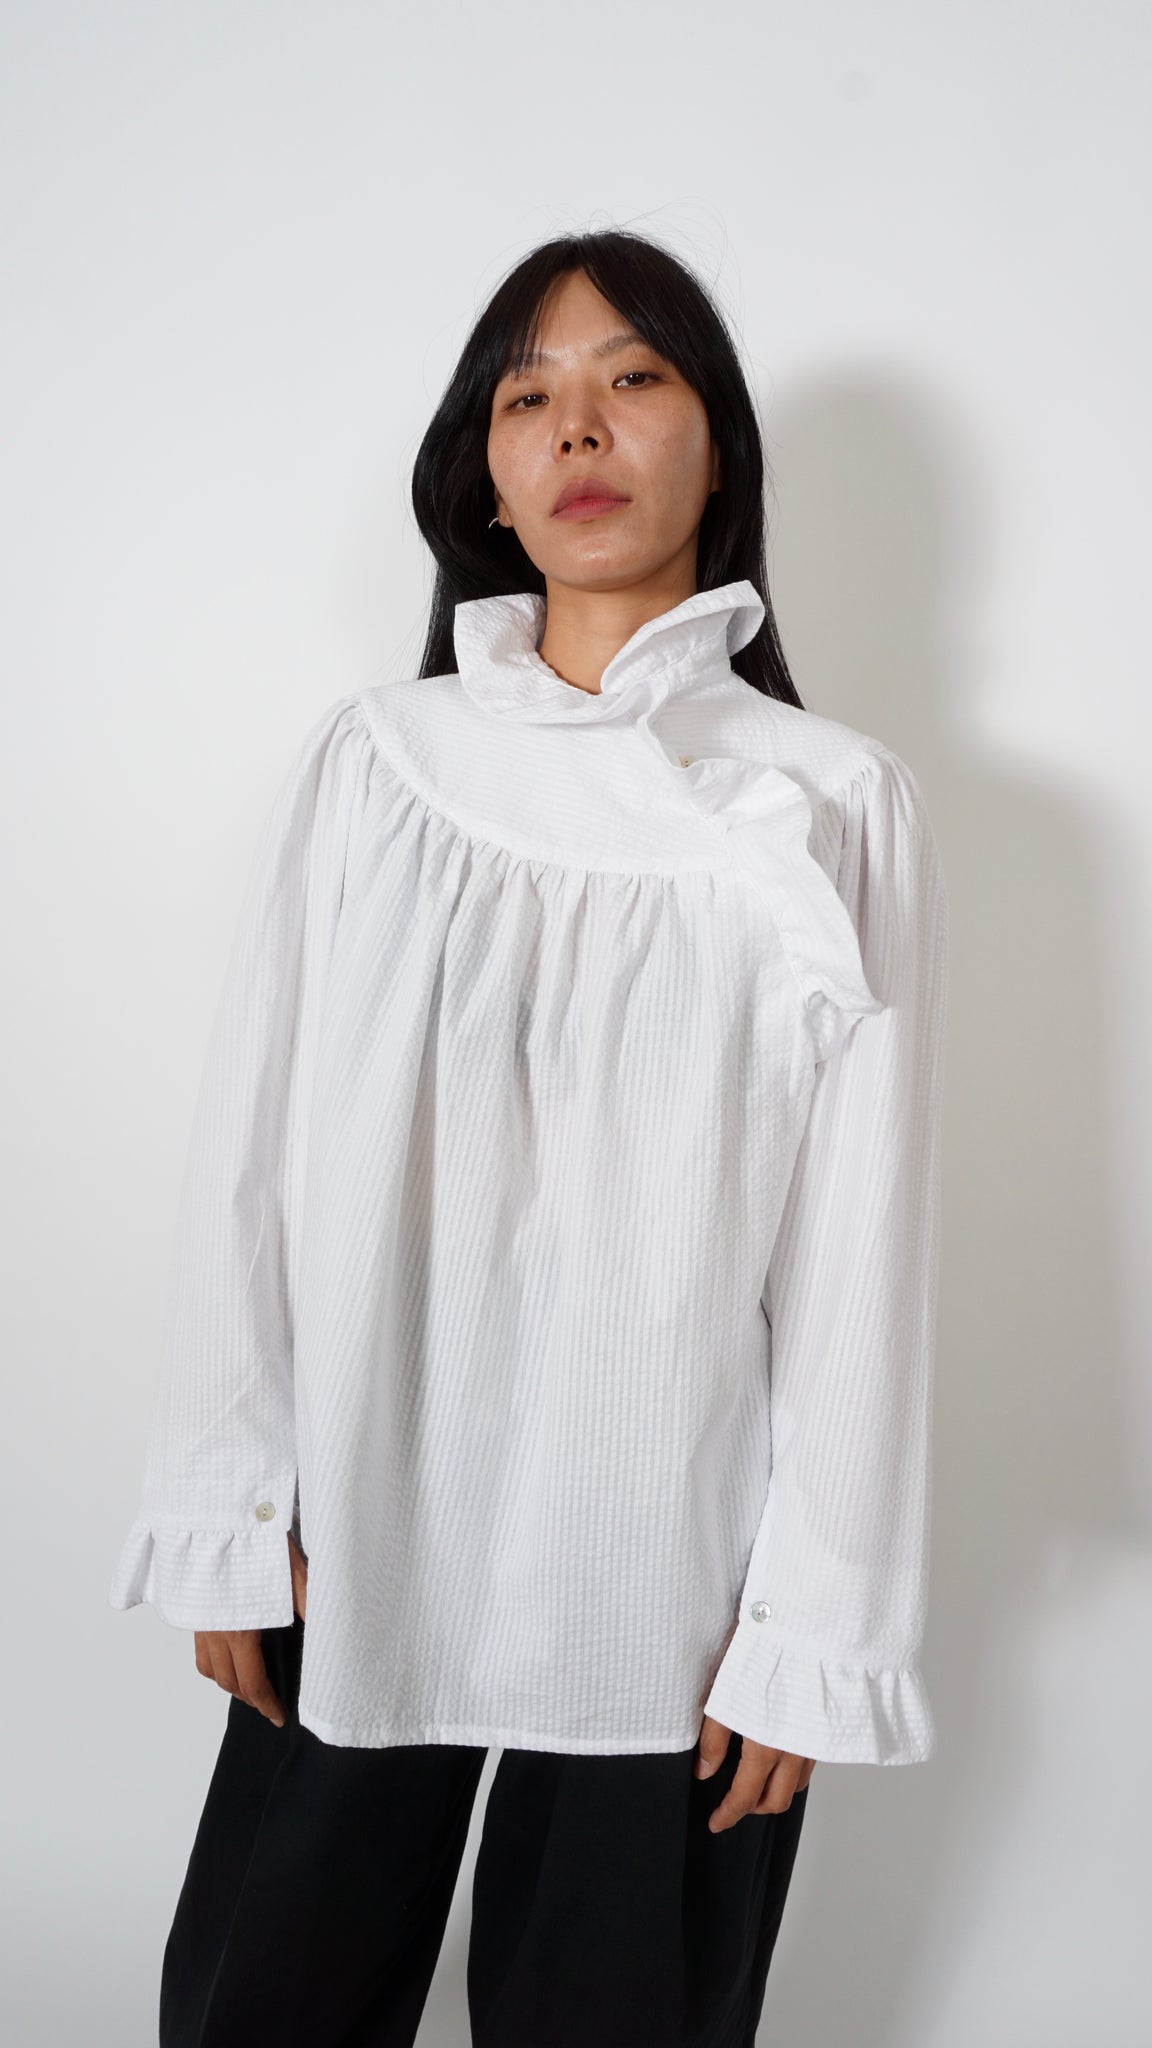 Cotton shirt by Sabine Poupinel